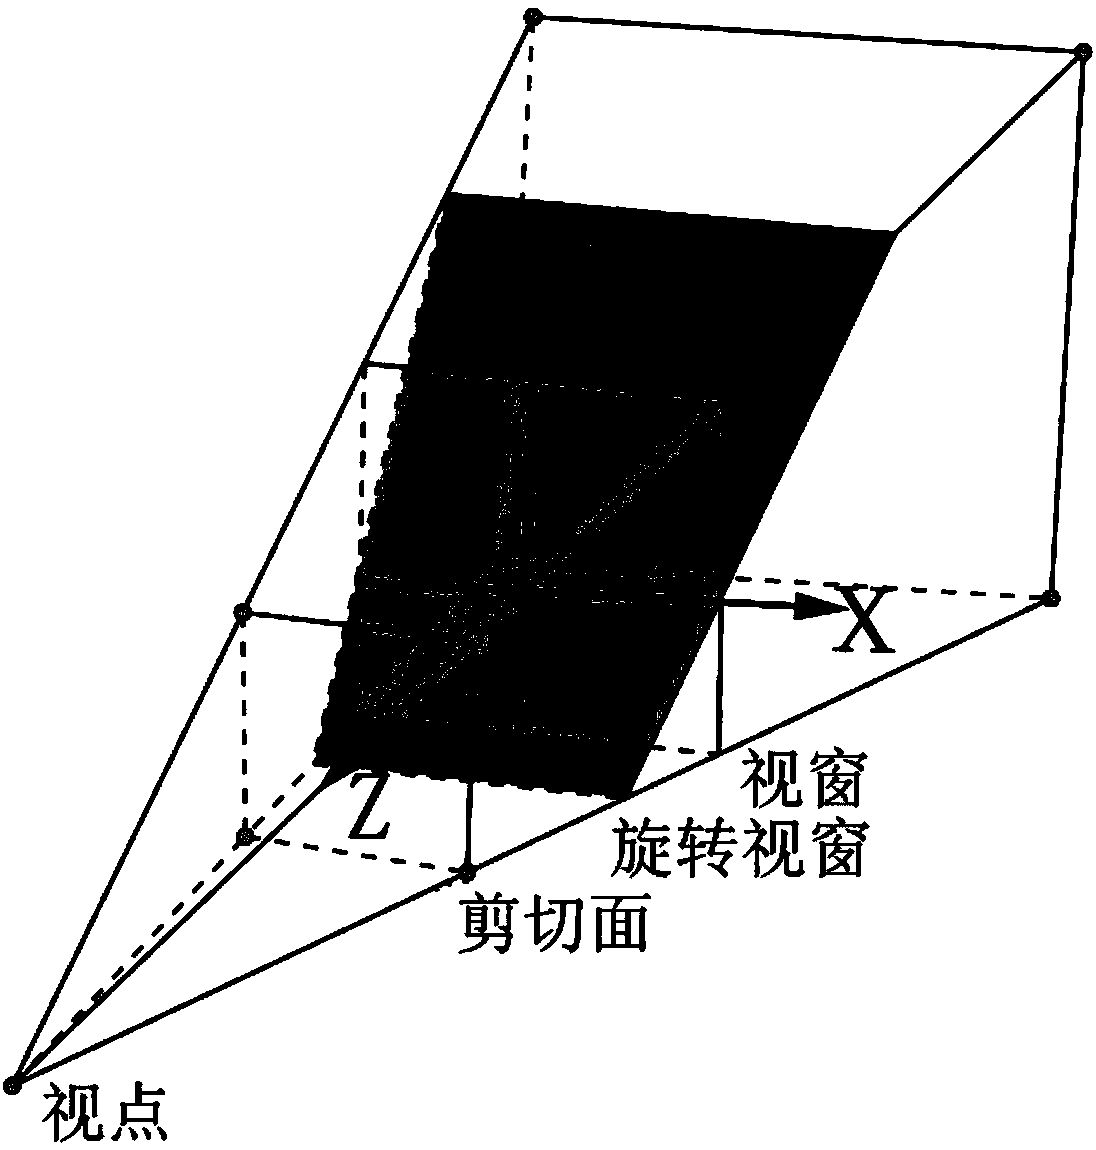 Tile loading method for 2.5-dimensional map service